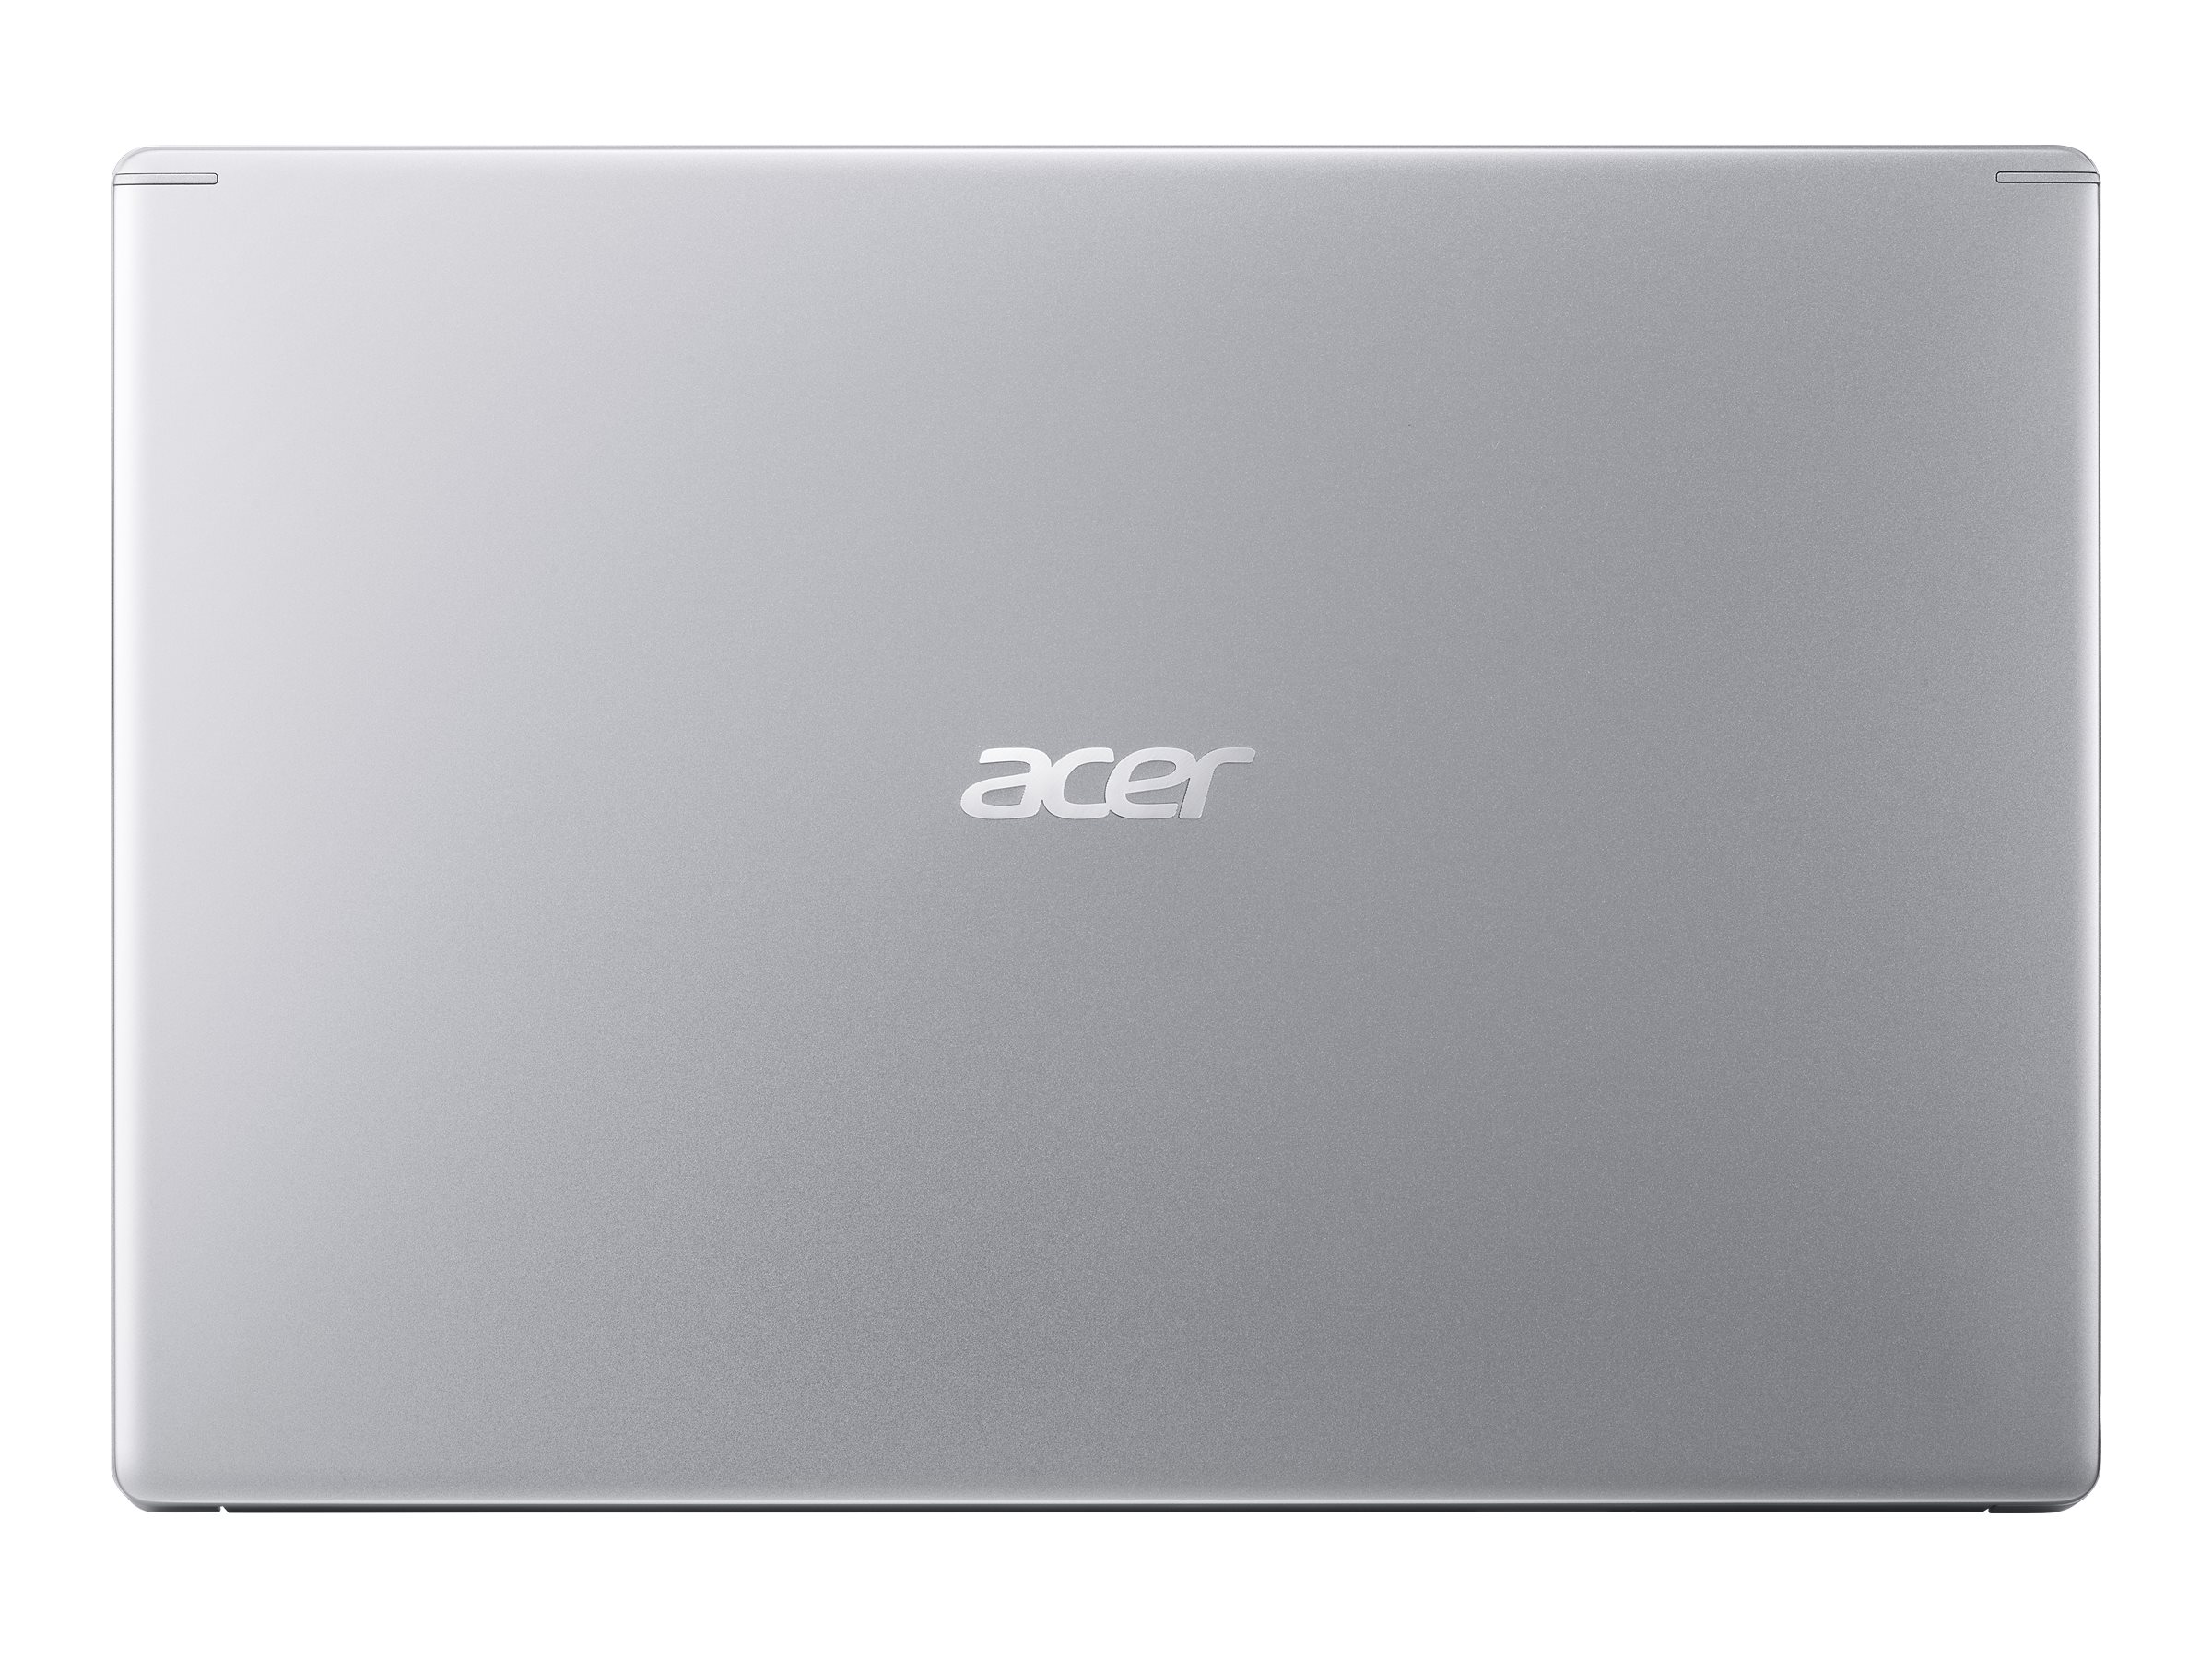 Acer Aspire 5 A515-54-37U3 - Intel Core i3 10110U / 2.1 GHz - Windows 10 Home 64-bit in S mode - UHD Graphics - 4 GB RAM - 128 GB SSD NVMe - 15.6" IPS 1920 x 1080 (Full HD) - Wi-Fi 5 - pure silver - kbd: US Intl - image 4 of 7